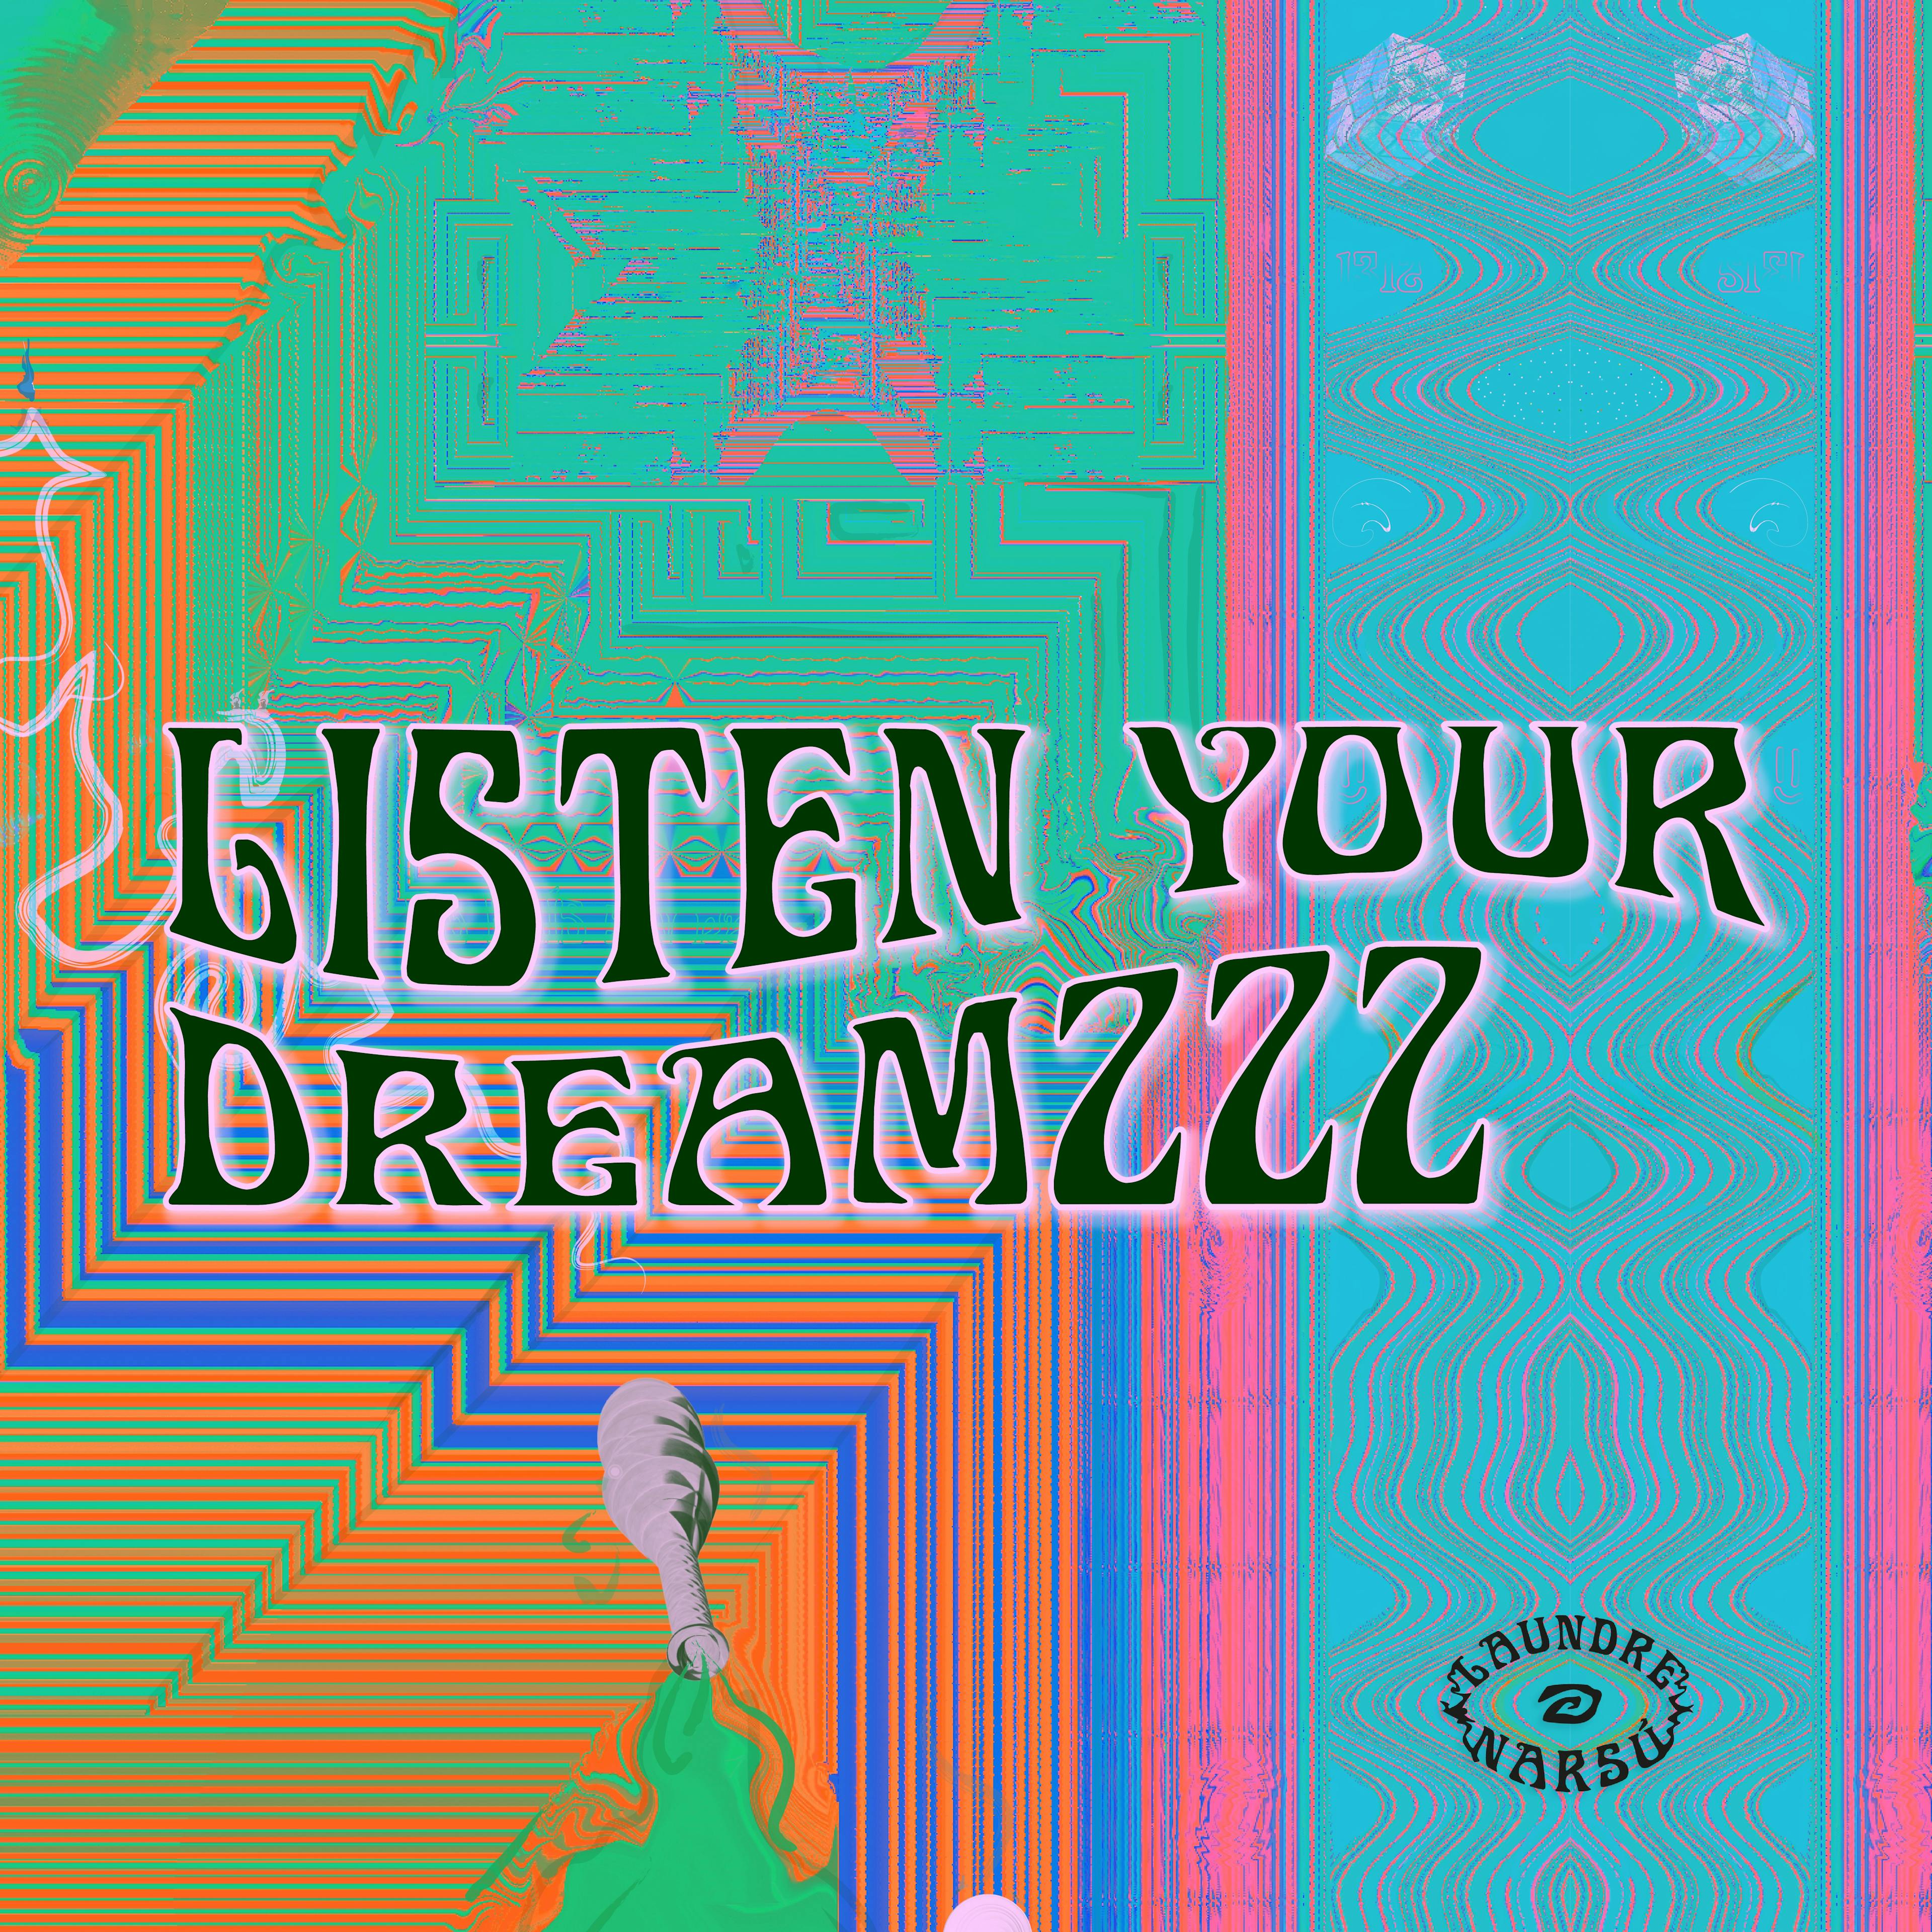 Listen your dreamzzz